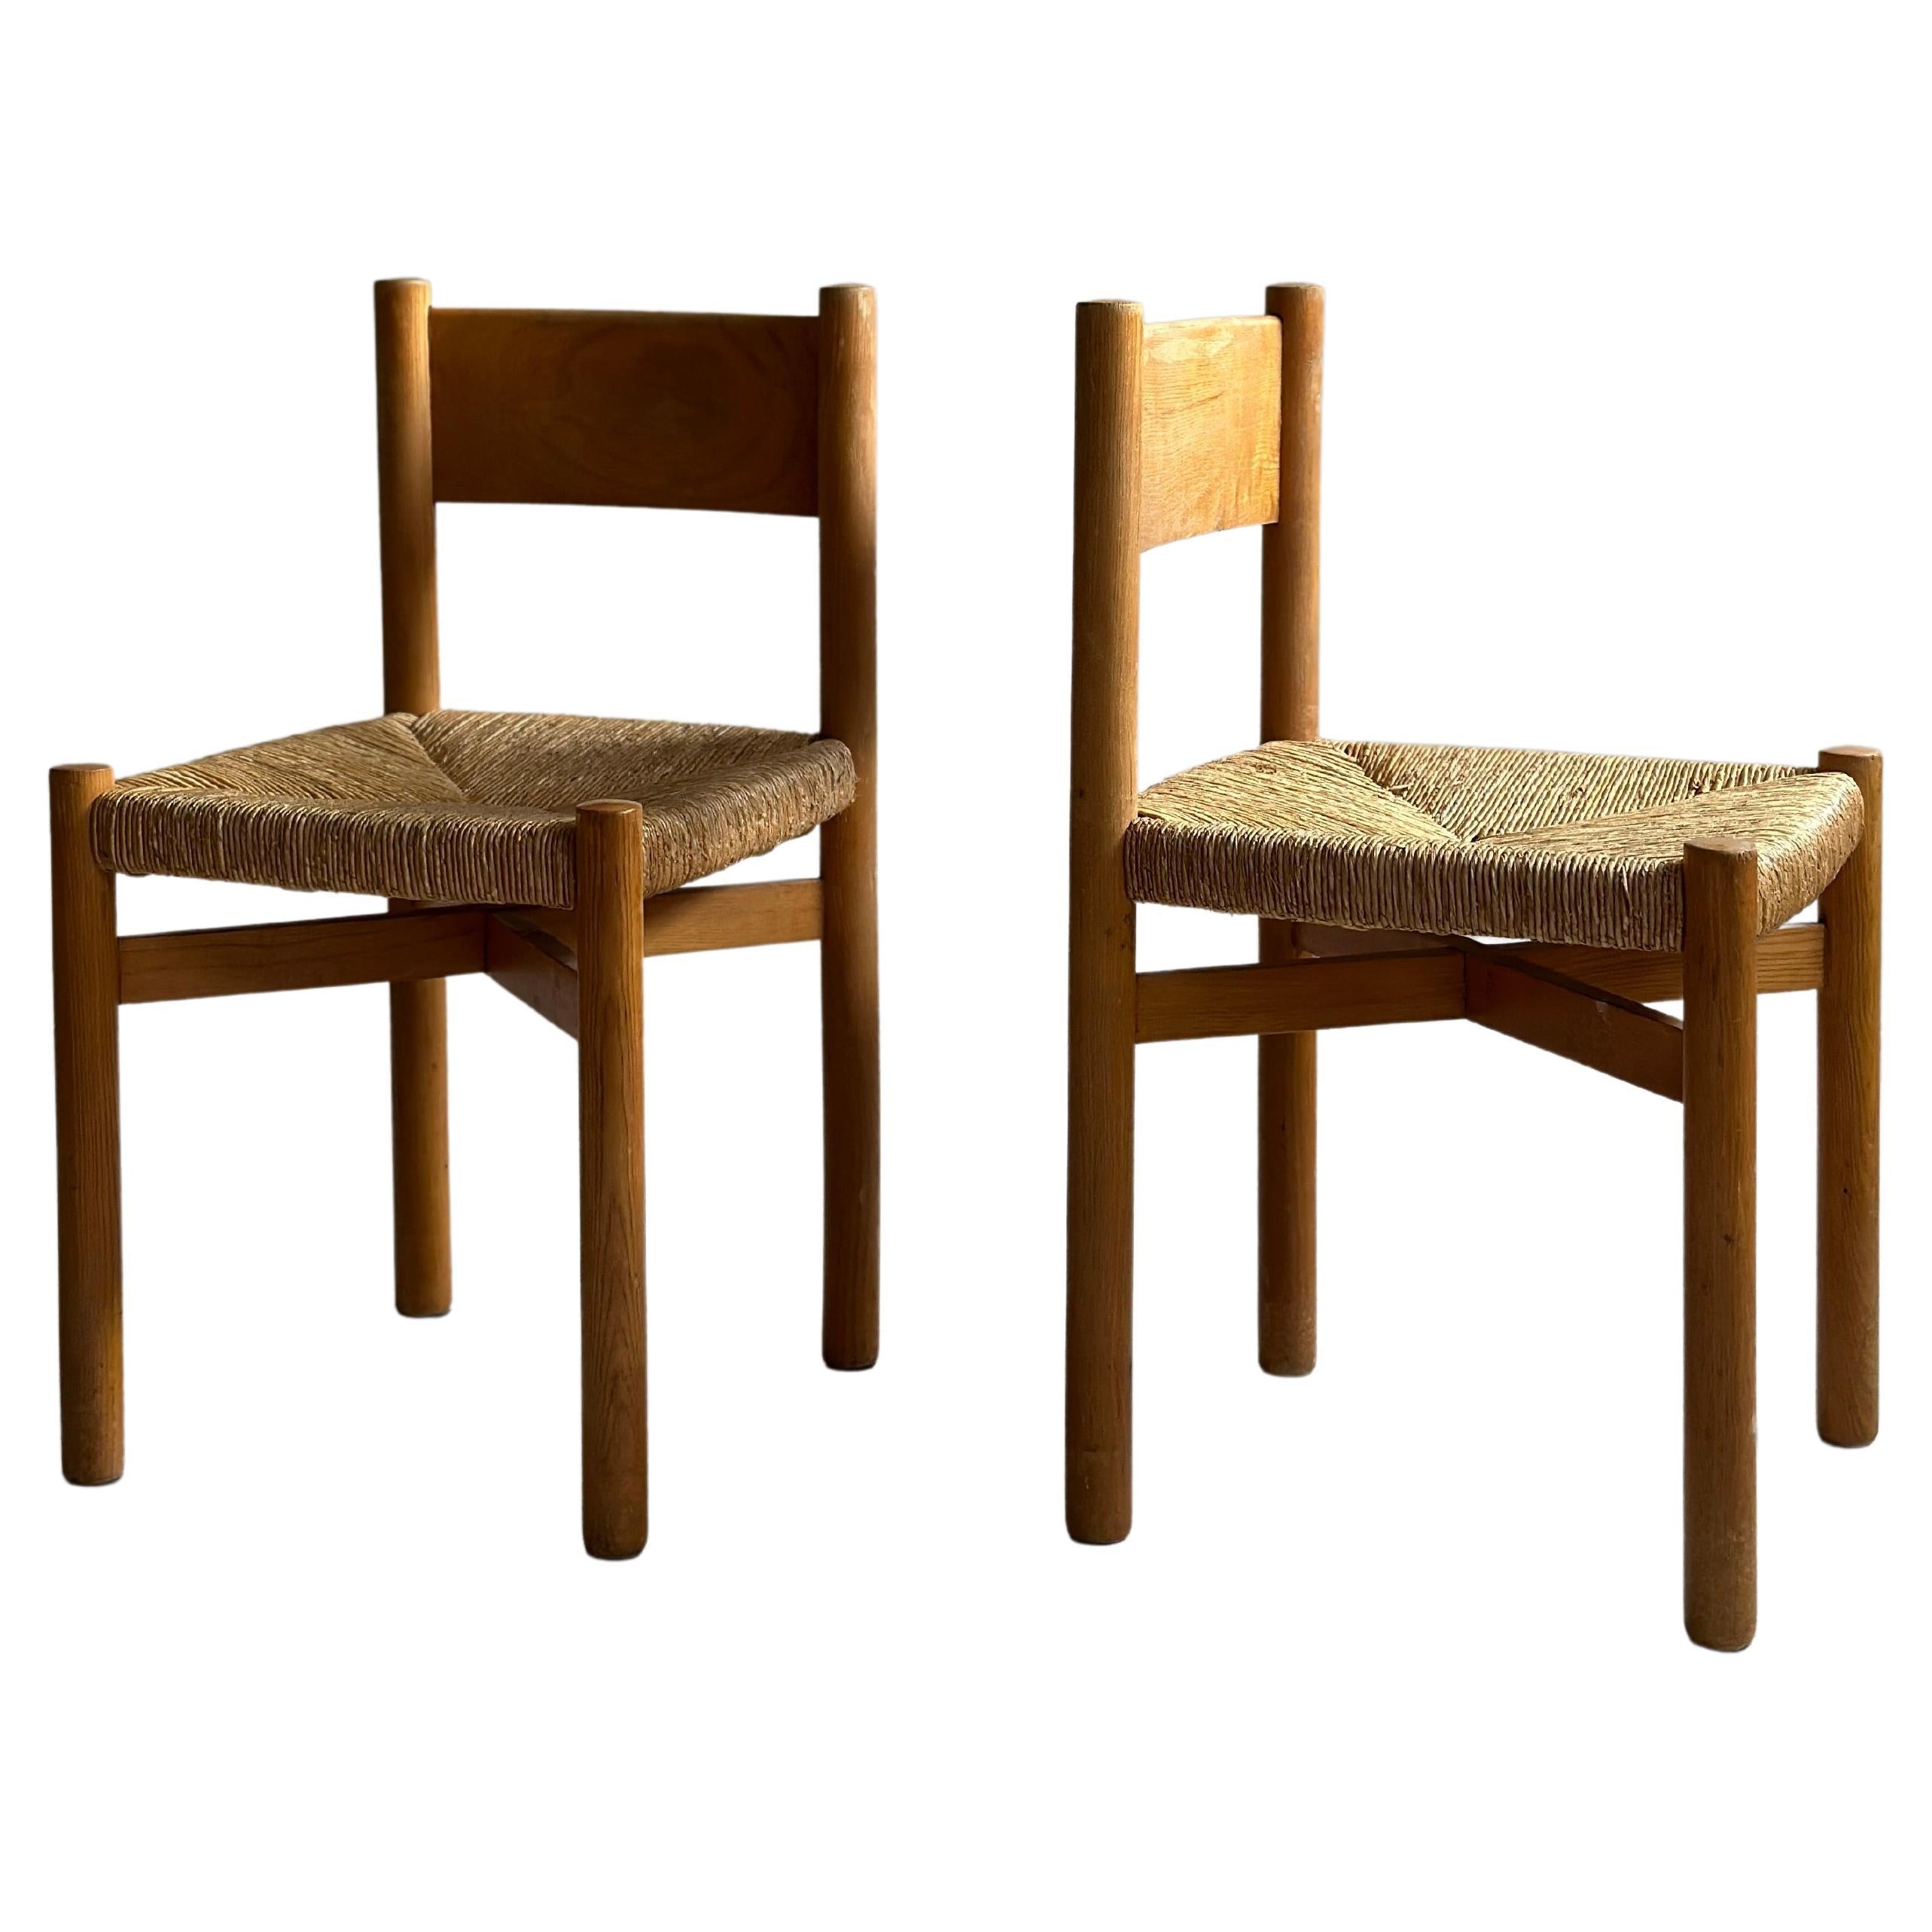 Charlotte Perriand (1903-1999) Paire de chaises "Meribel", France c. 1948